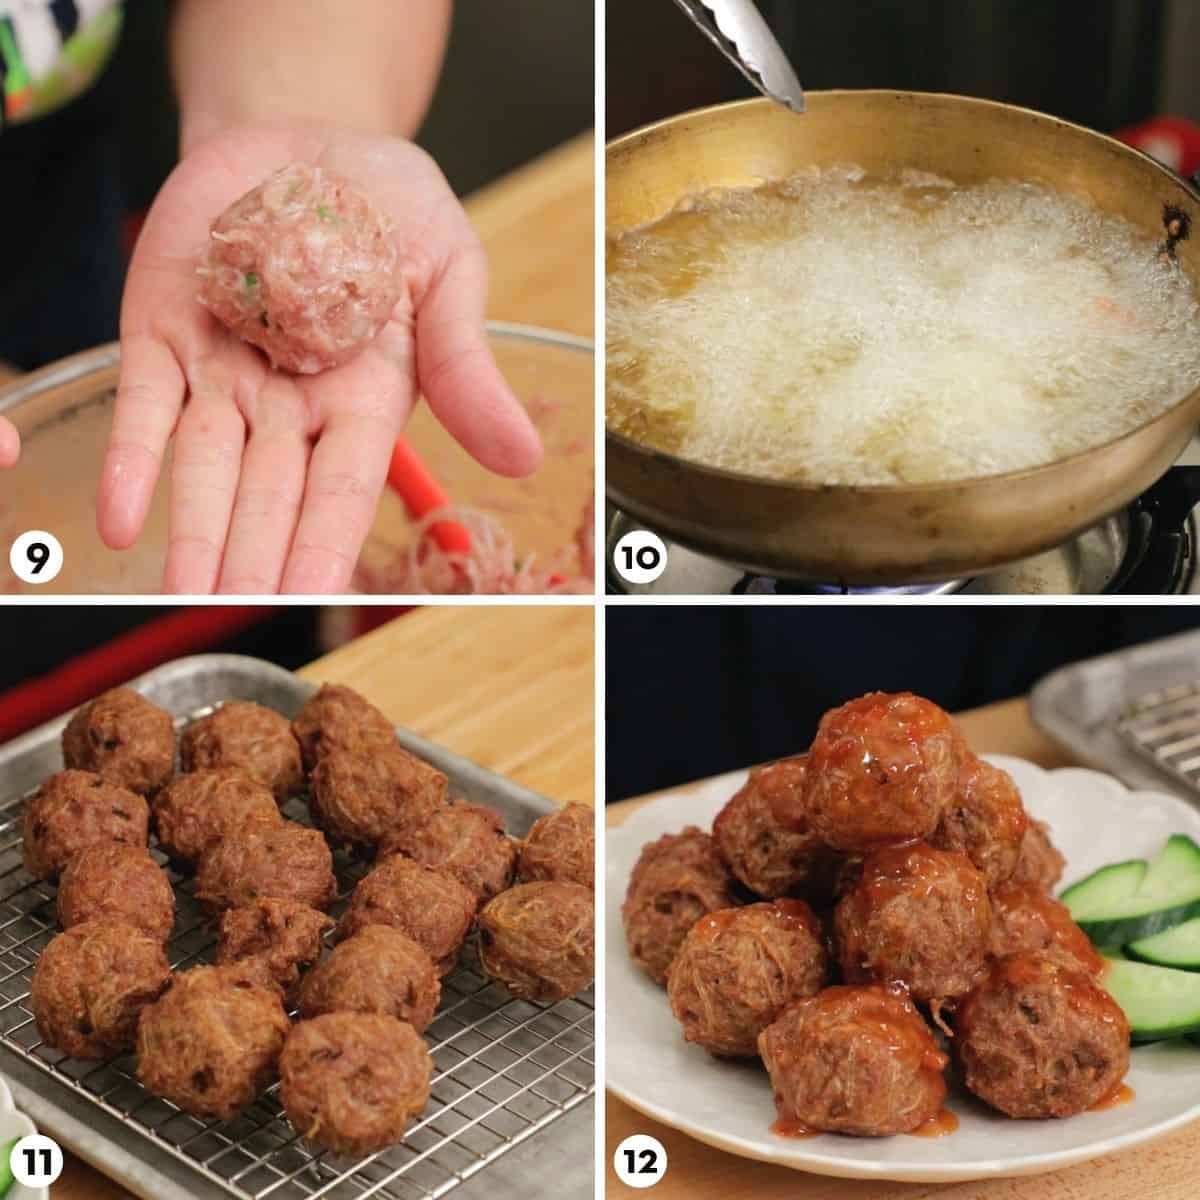 Process shots for making noodle meatballs, step 1-4